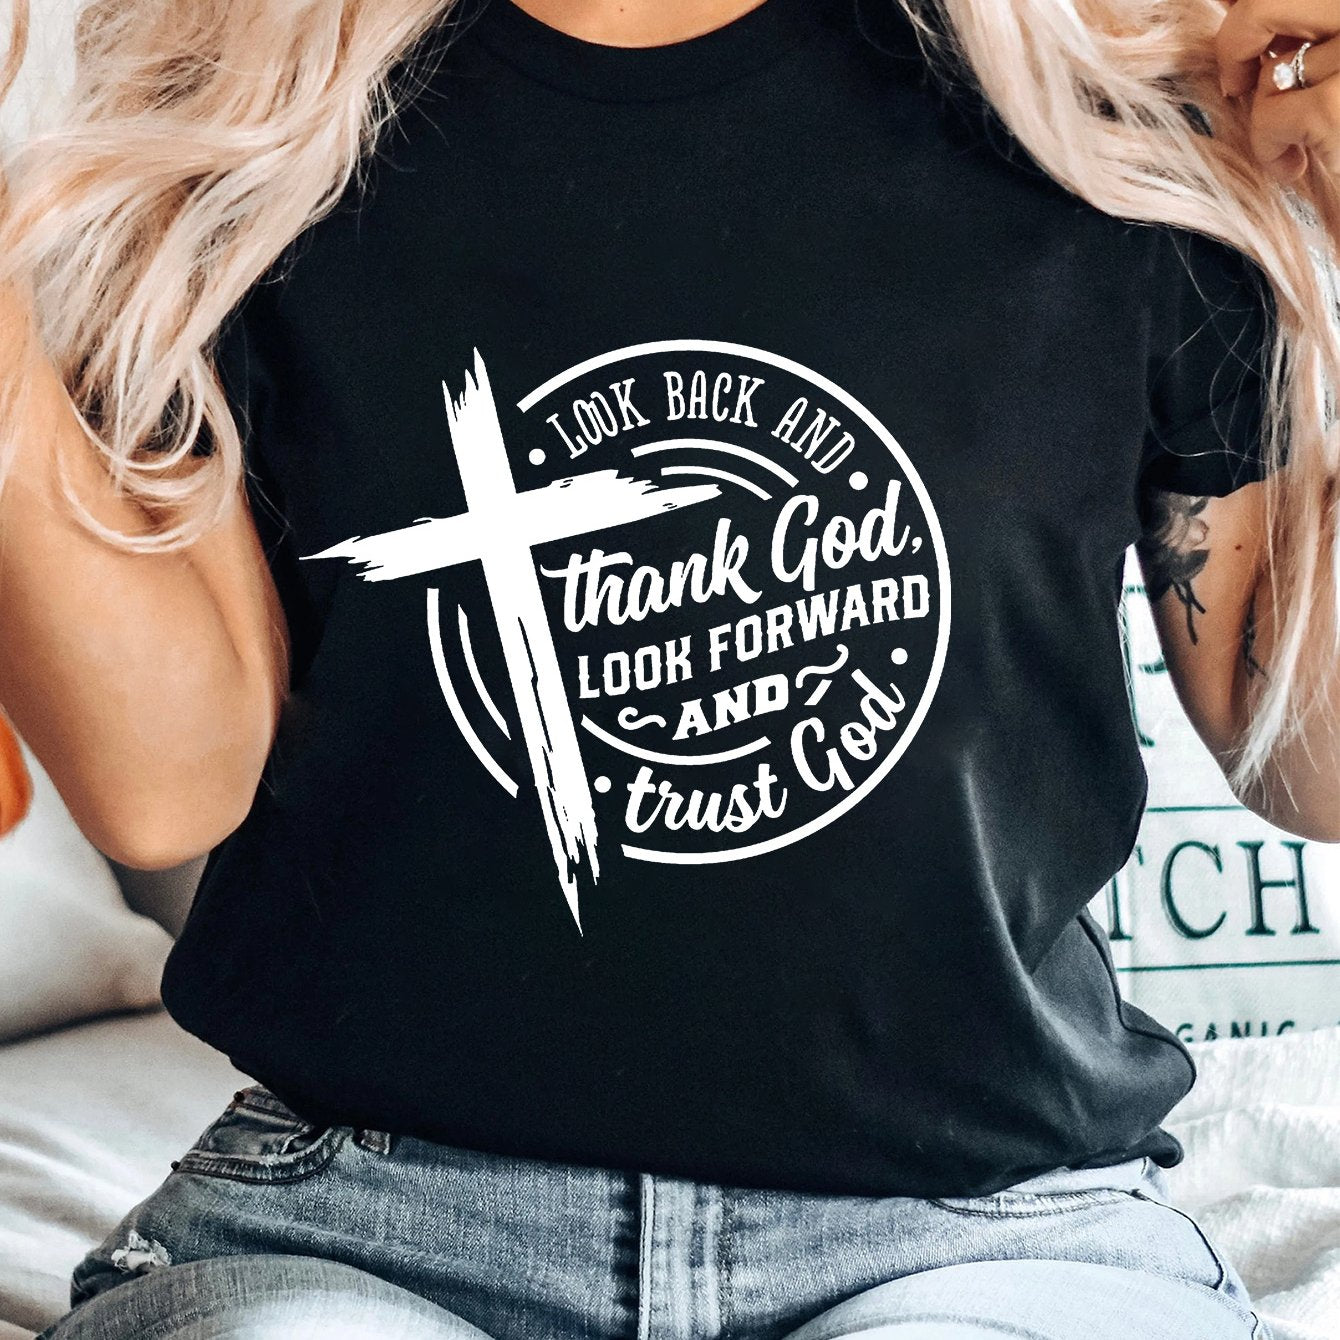 Thank God Trust God Plus Size Women's Christian T-Shirt claimedbygoddesigns